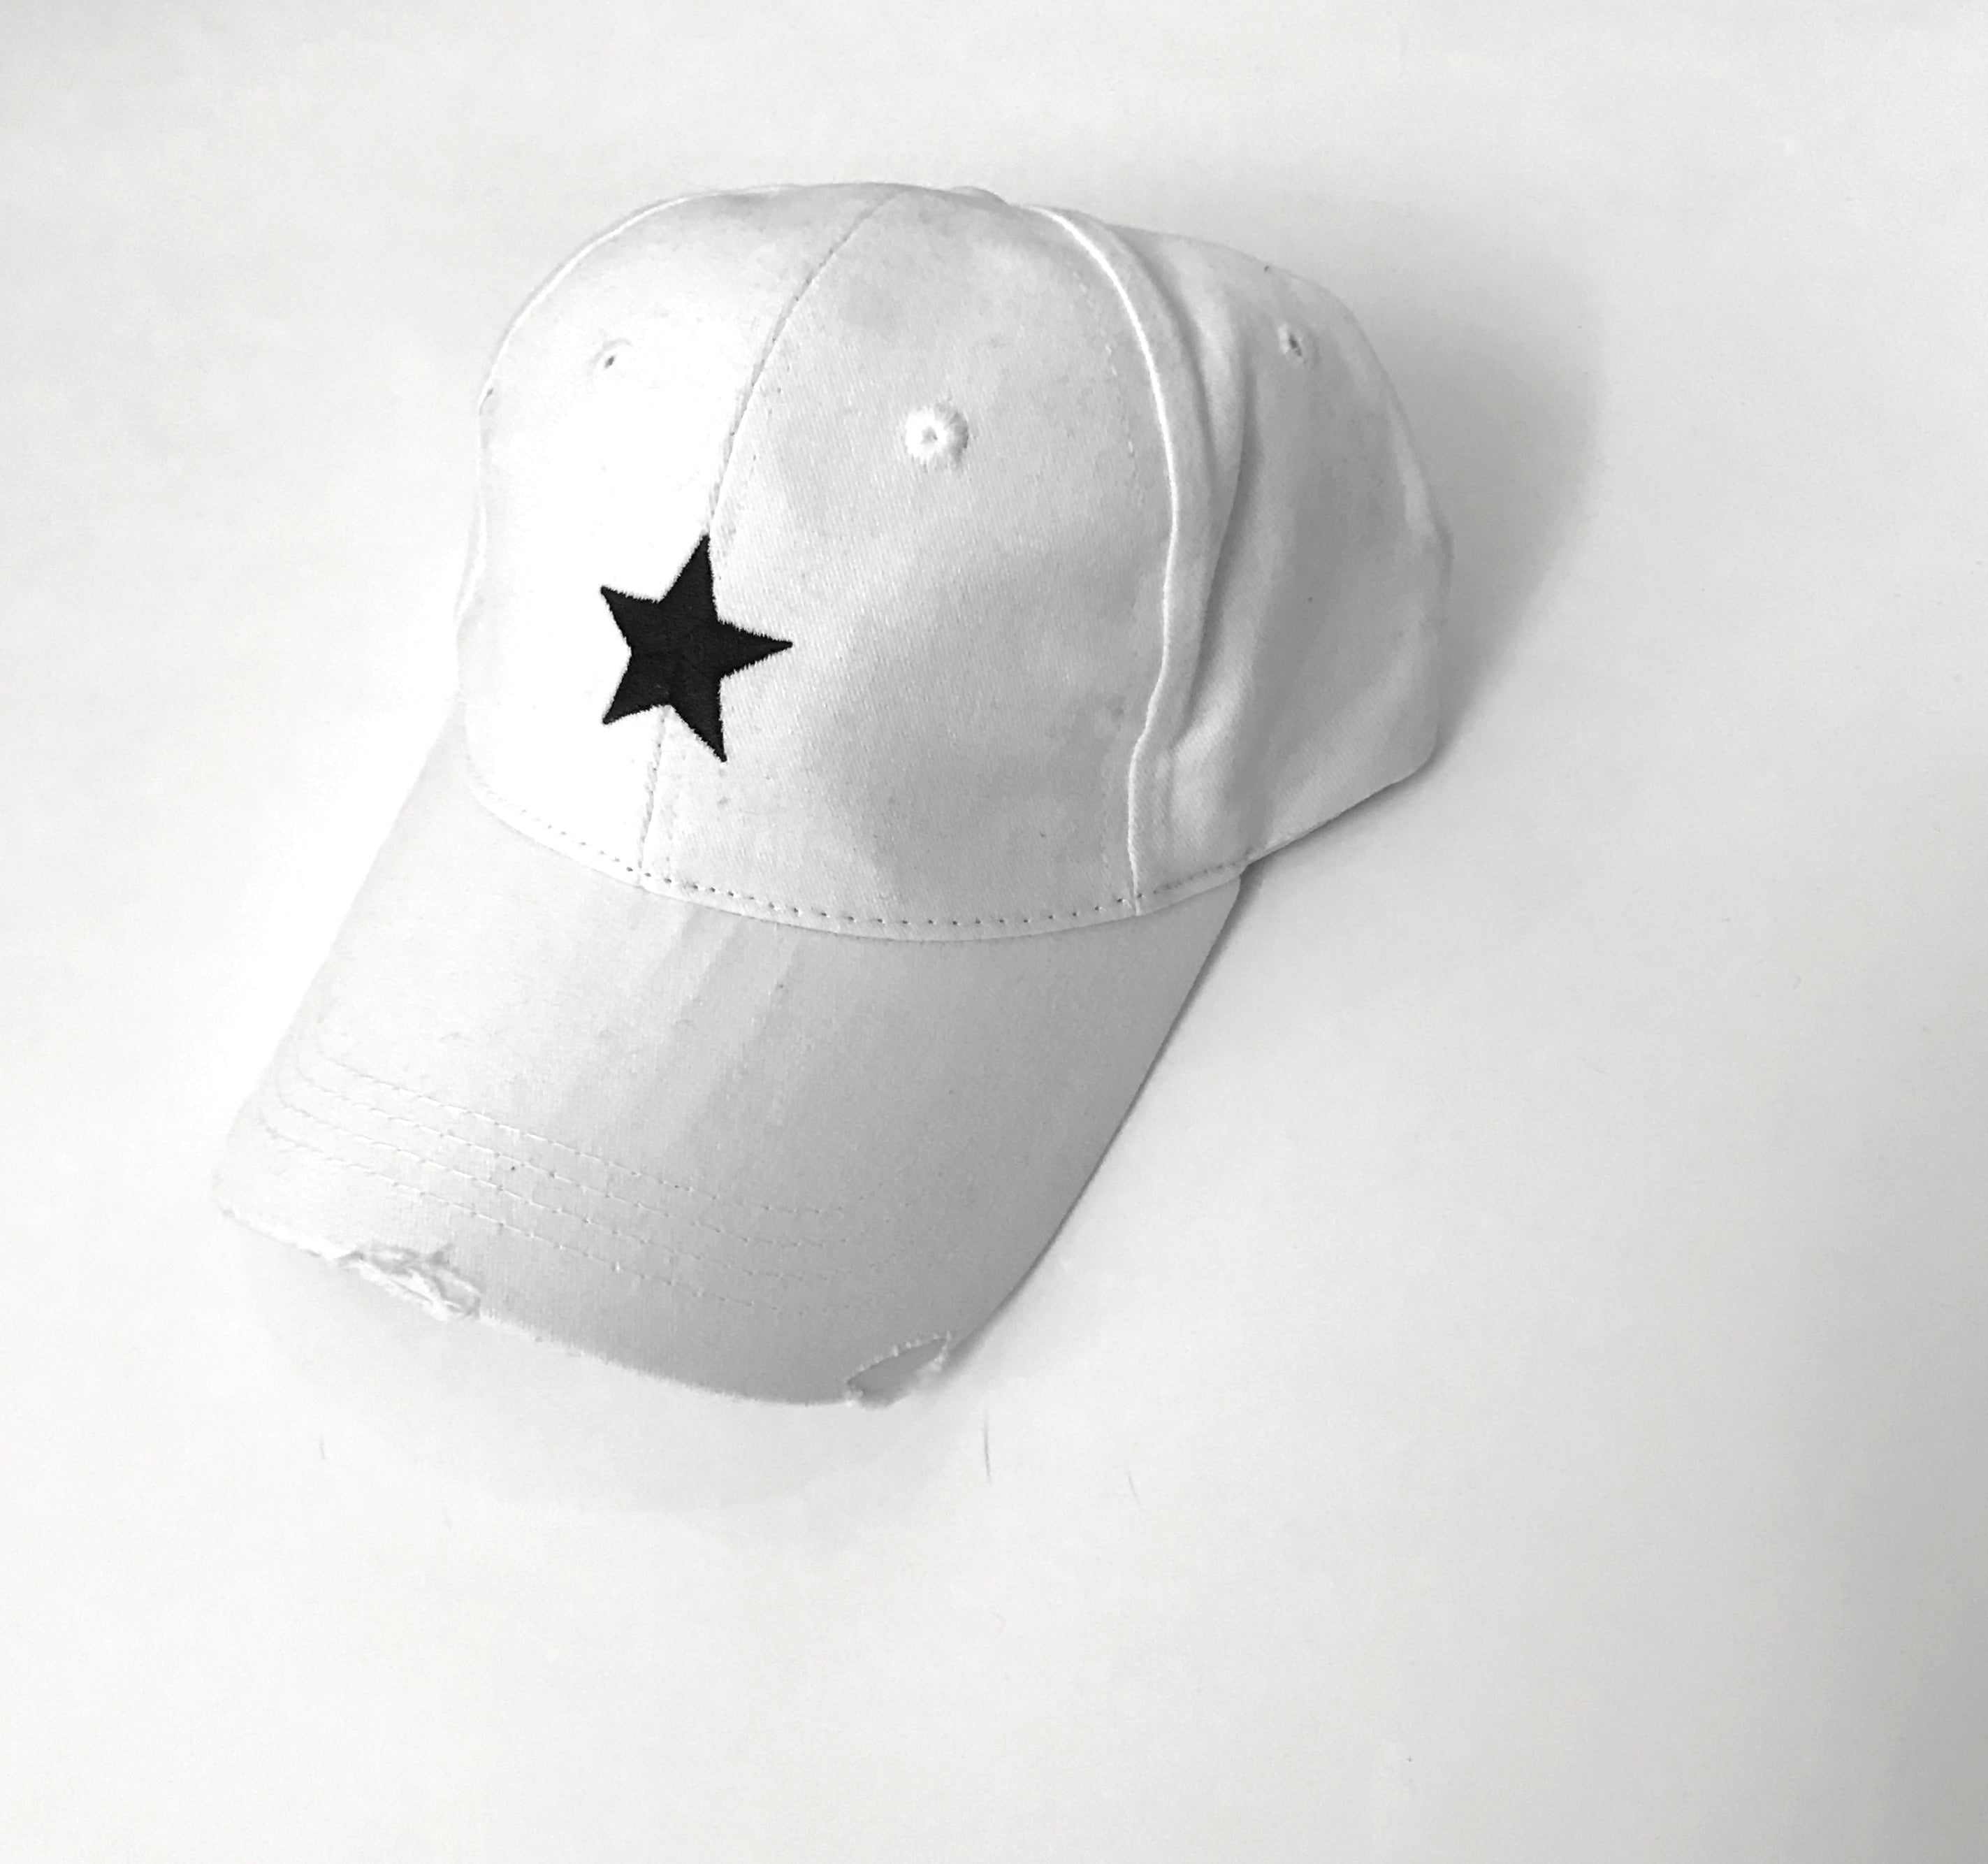 boardwalk baseball cap pre order ship 6/15-7/1 white/black star